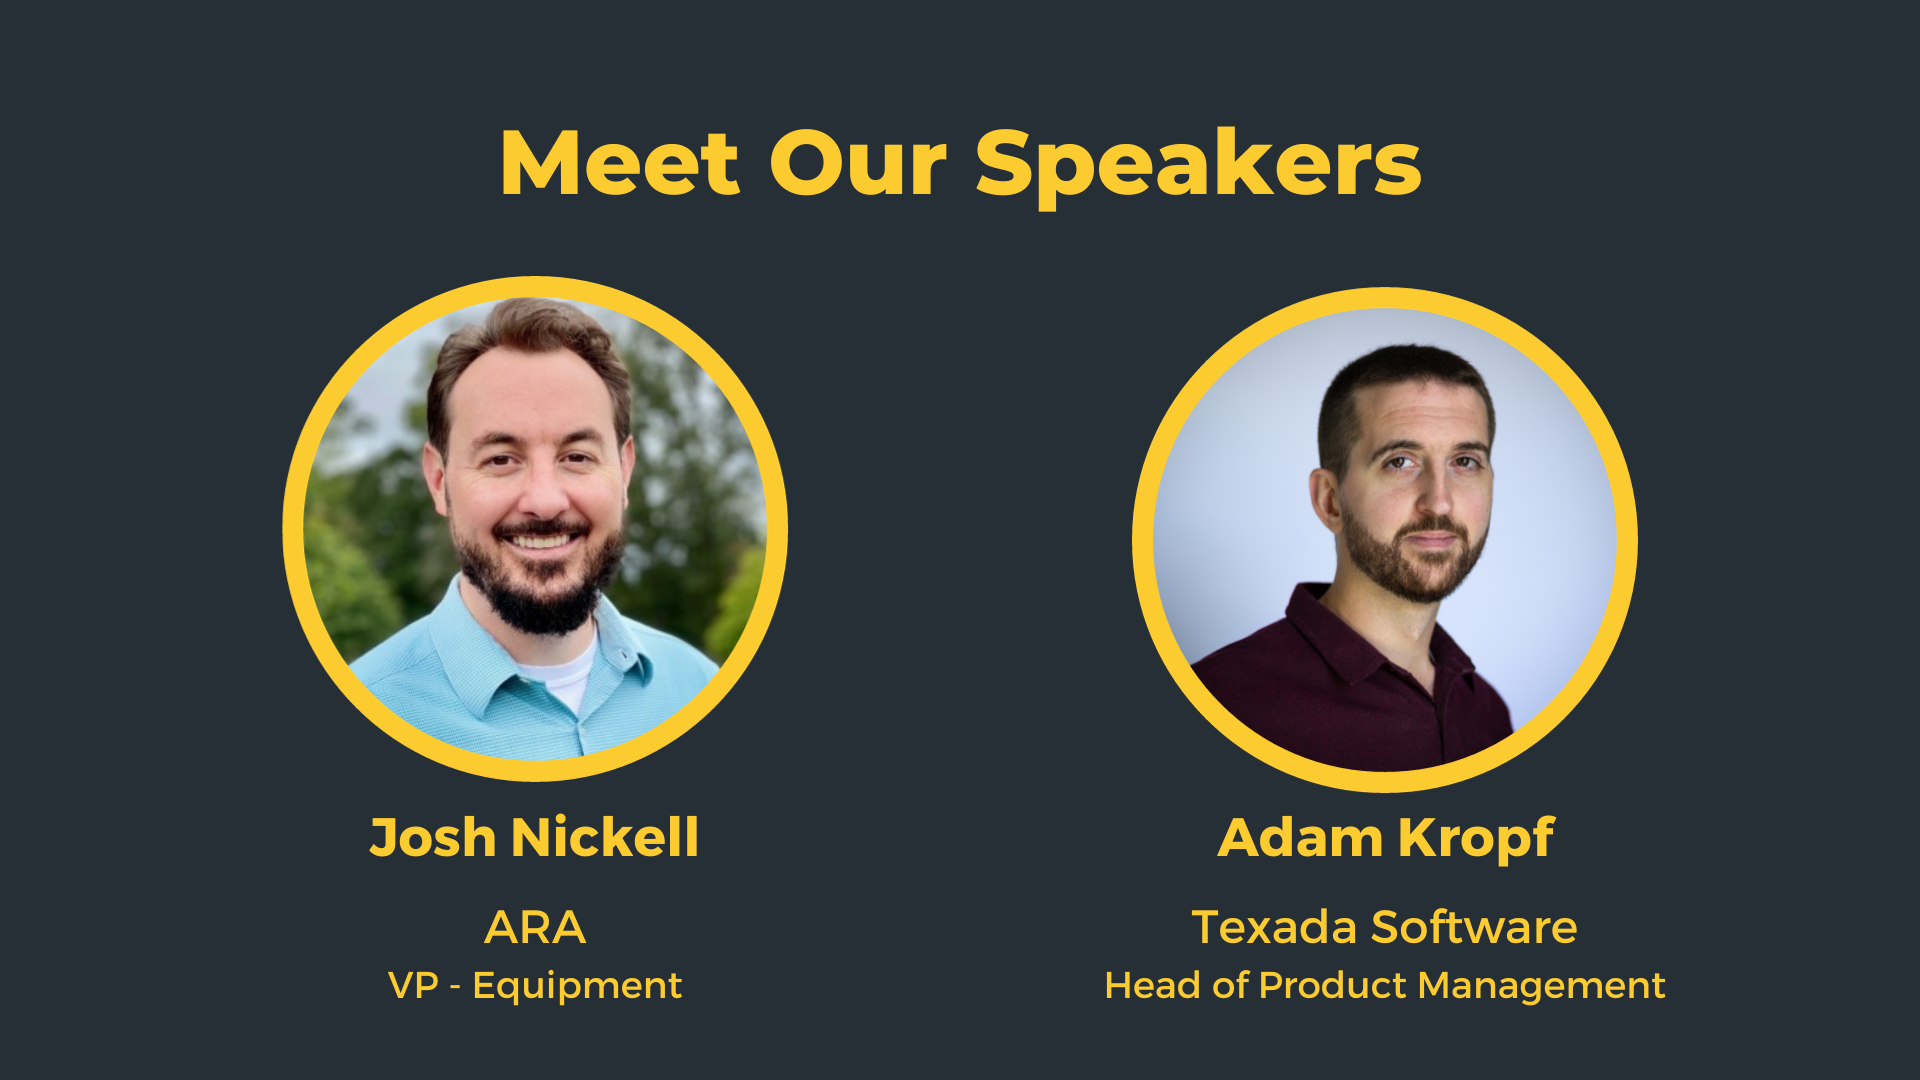 Meet Our Speakers - Josh and Adam